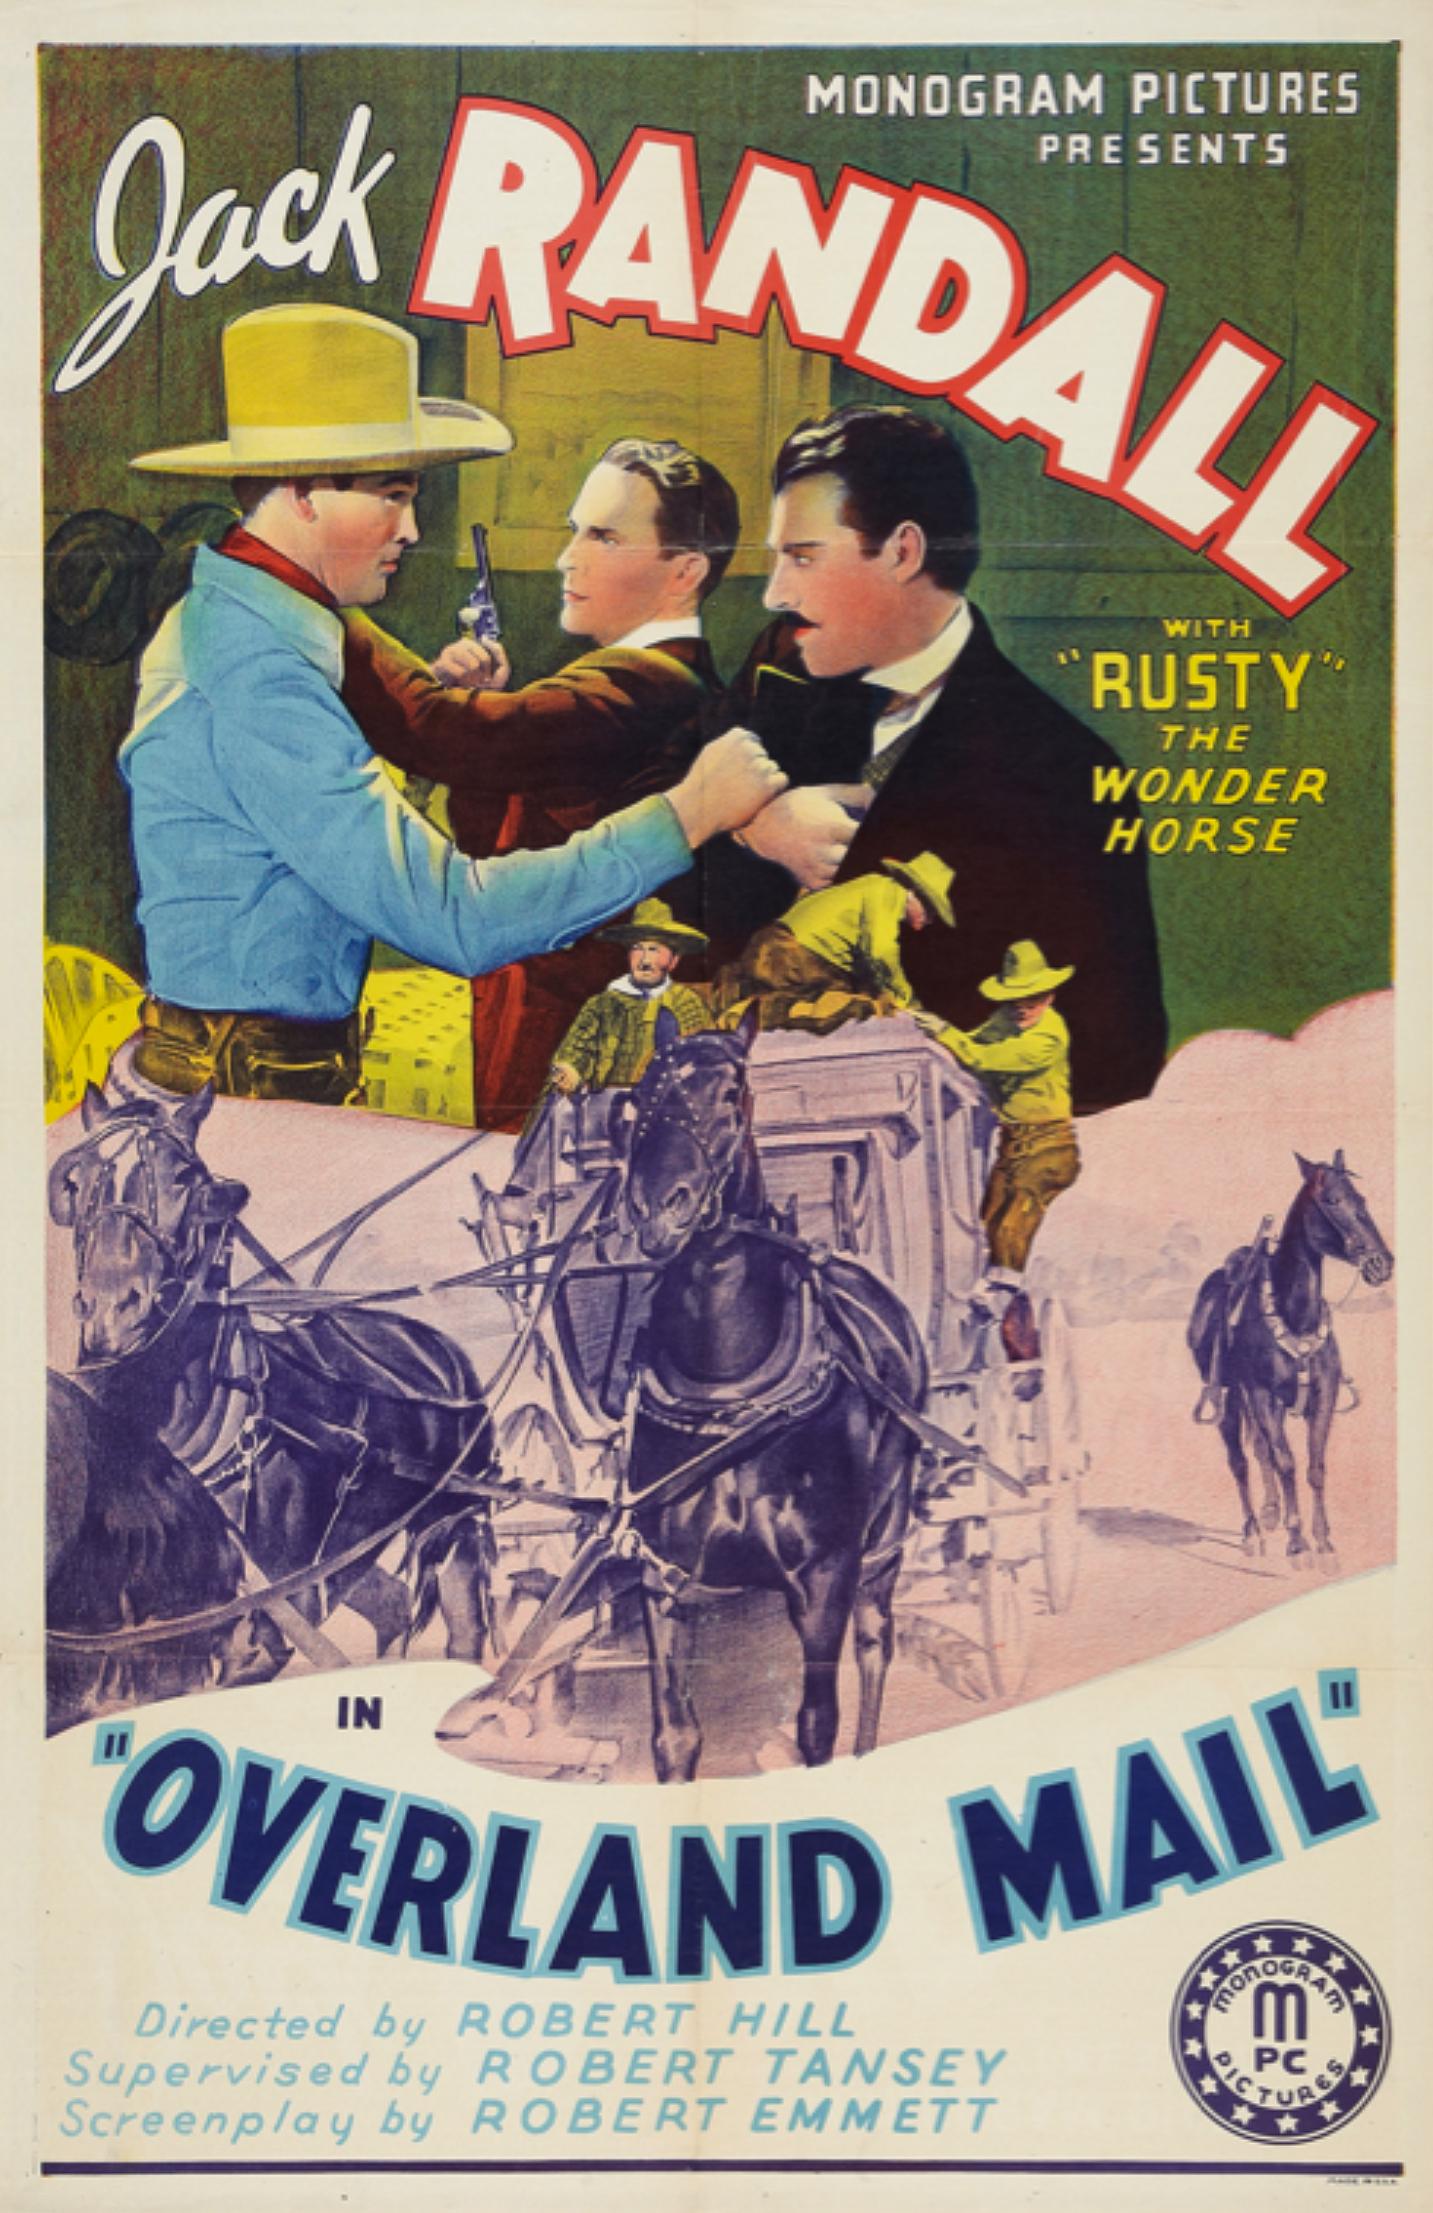 Overland Mail (1939) Screenshot 5